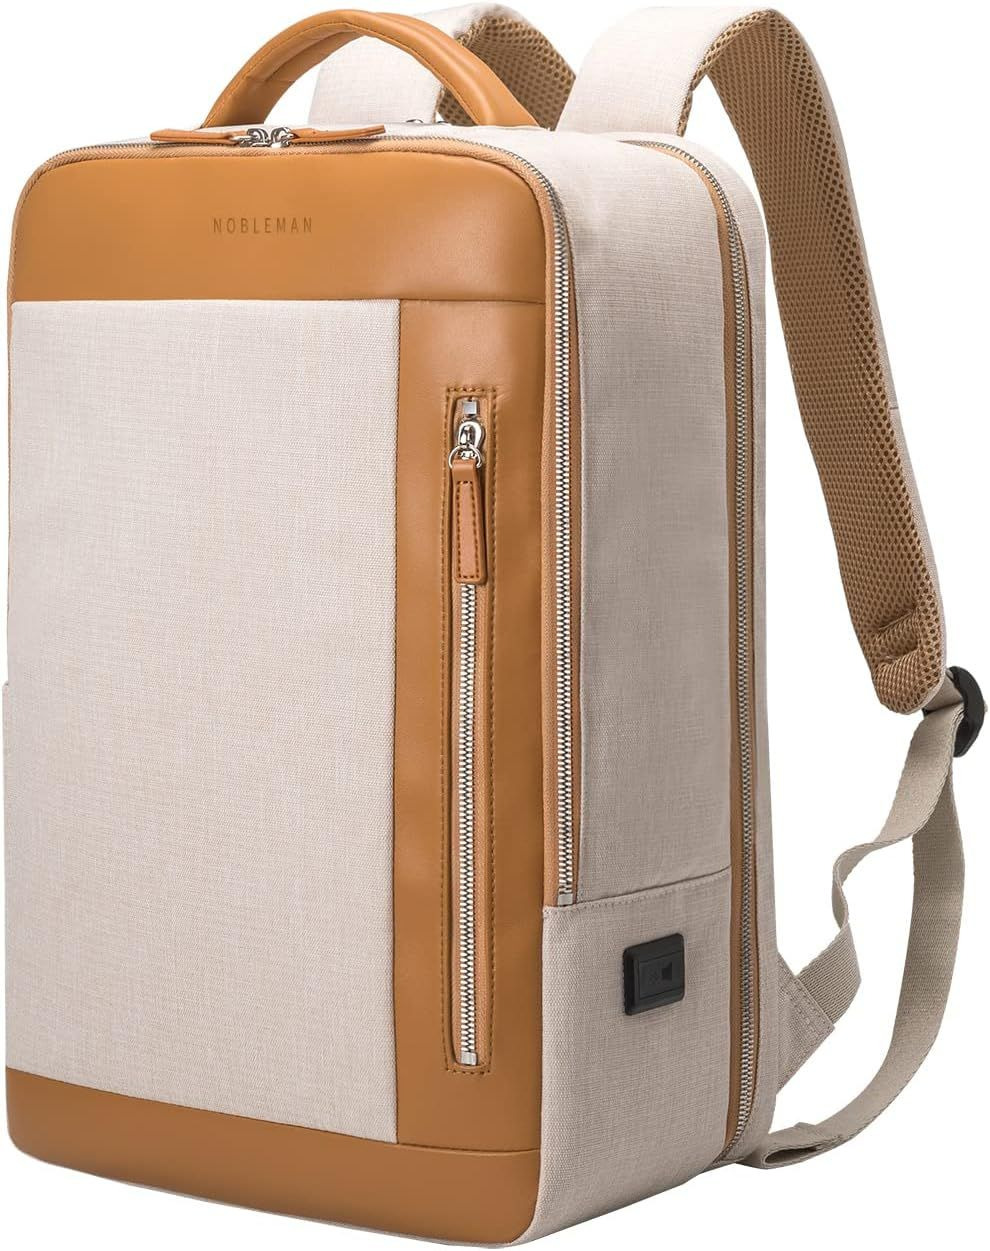 NOBLEMAN Business Smart Backpack Waterproof Laptop Travel Beige 